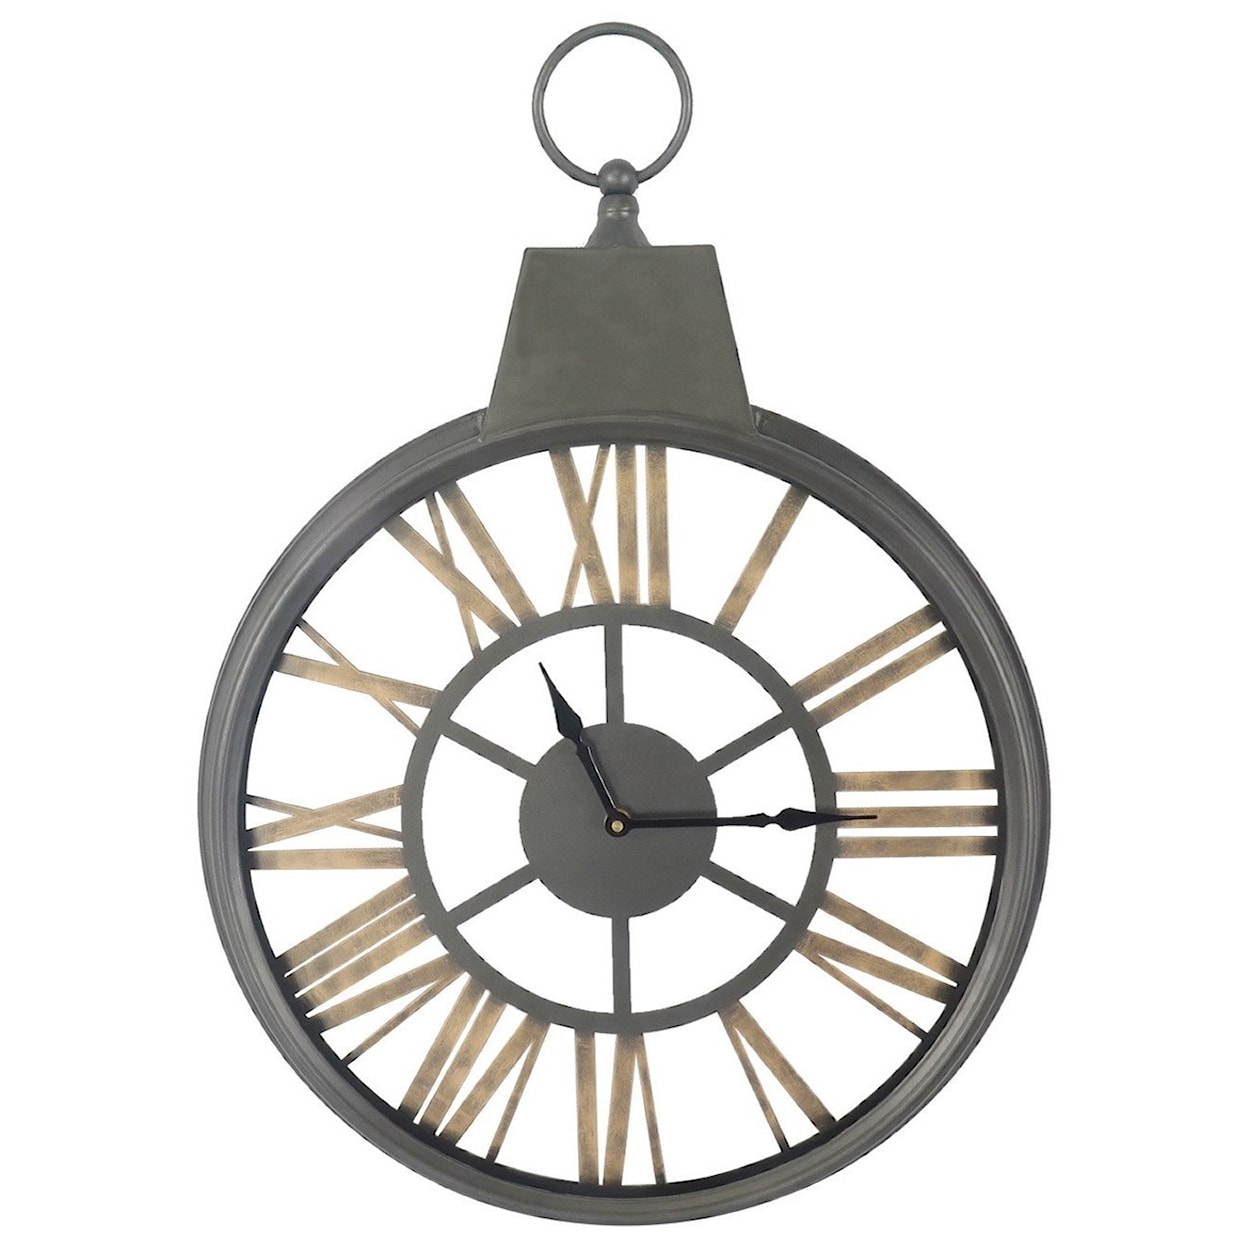 Crestview Collection Clocks Decorative Wall Clock